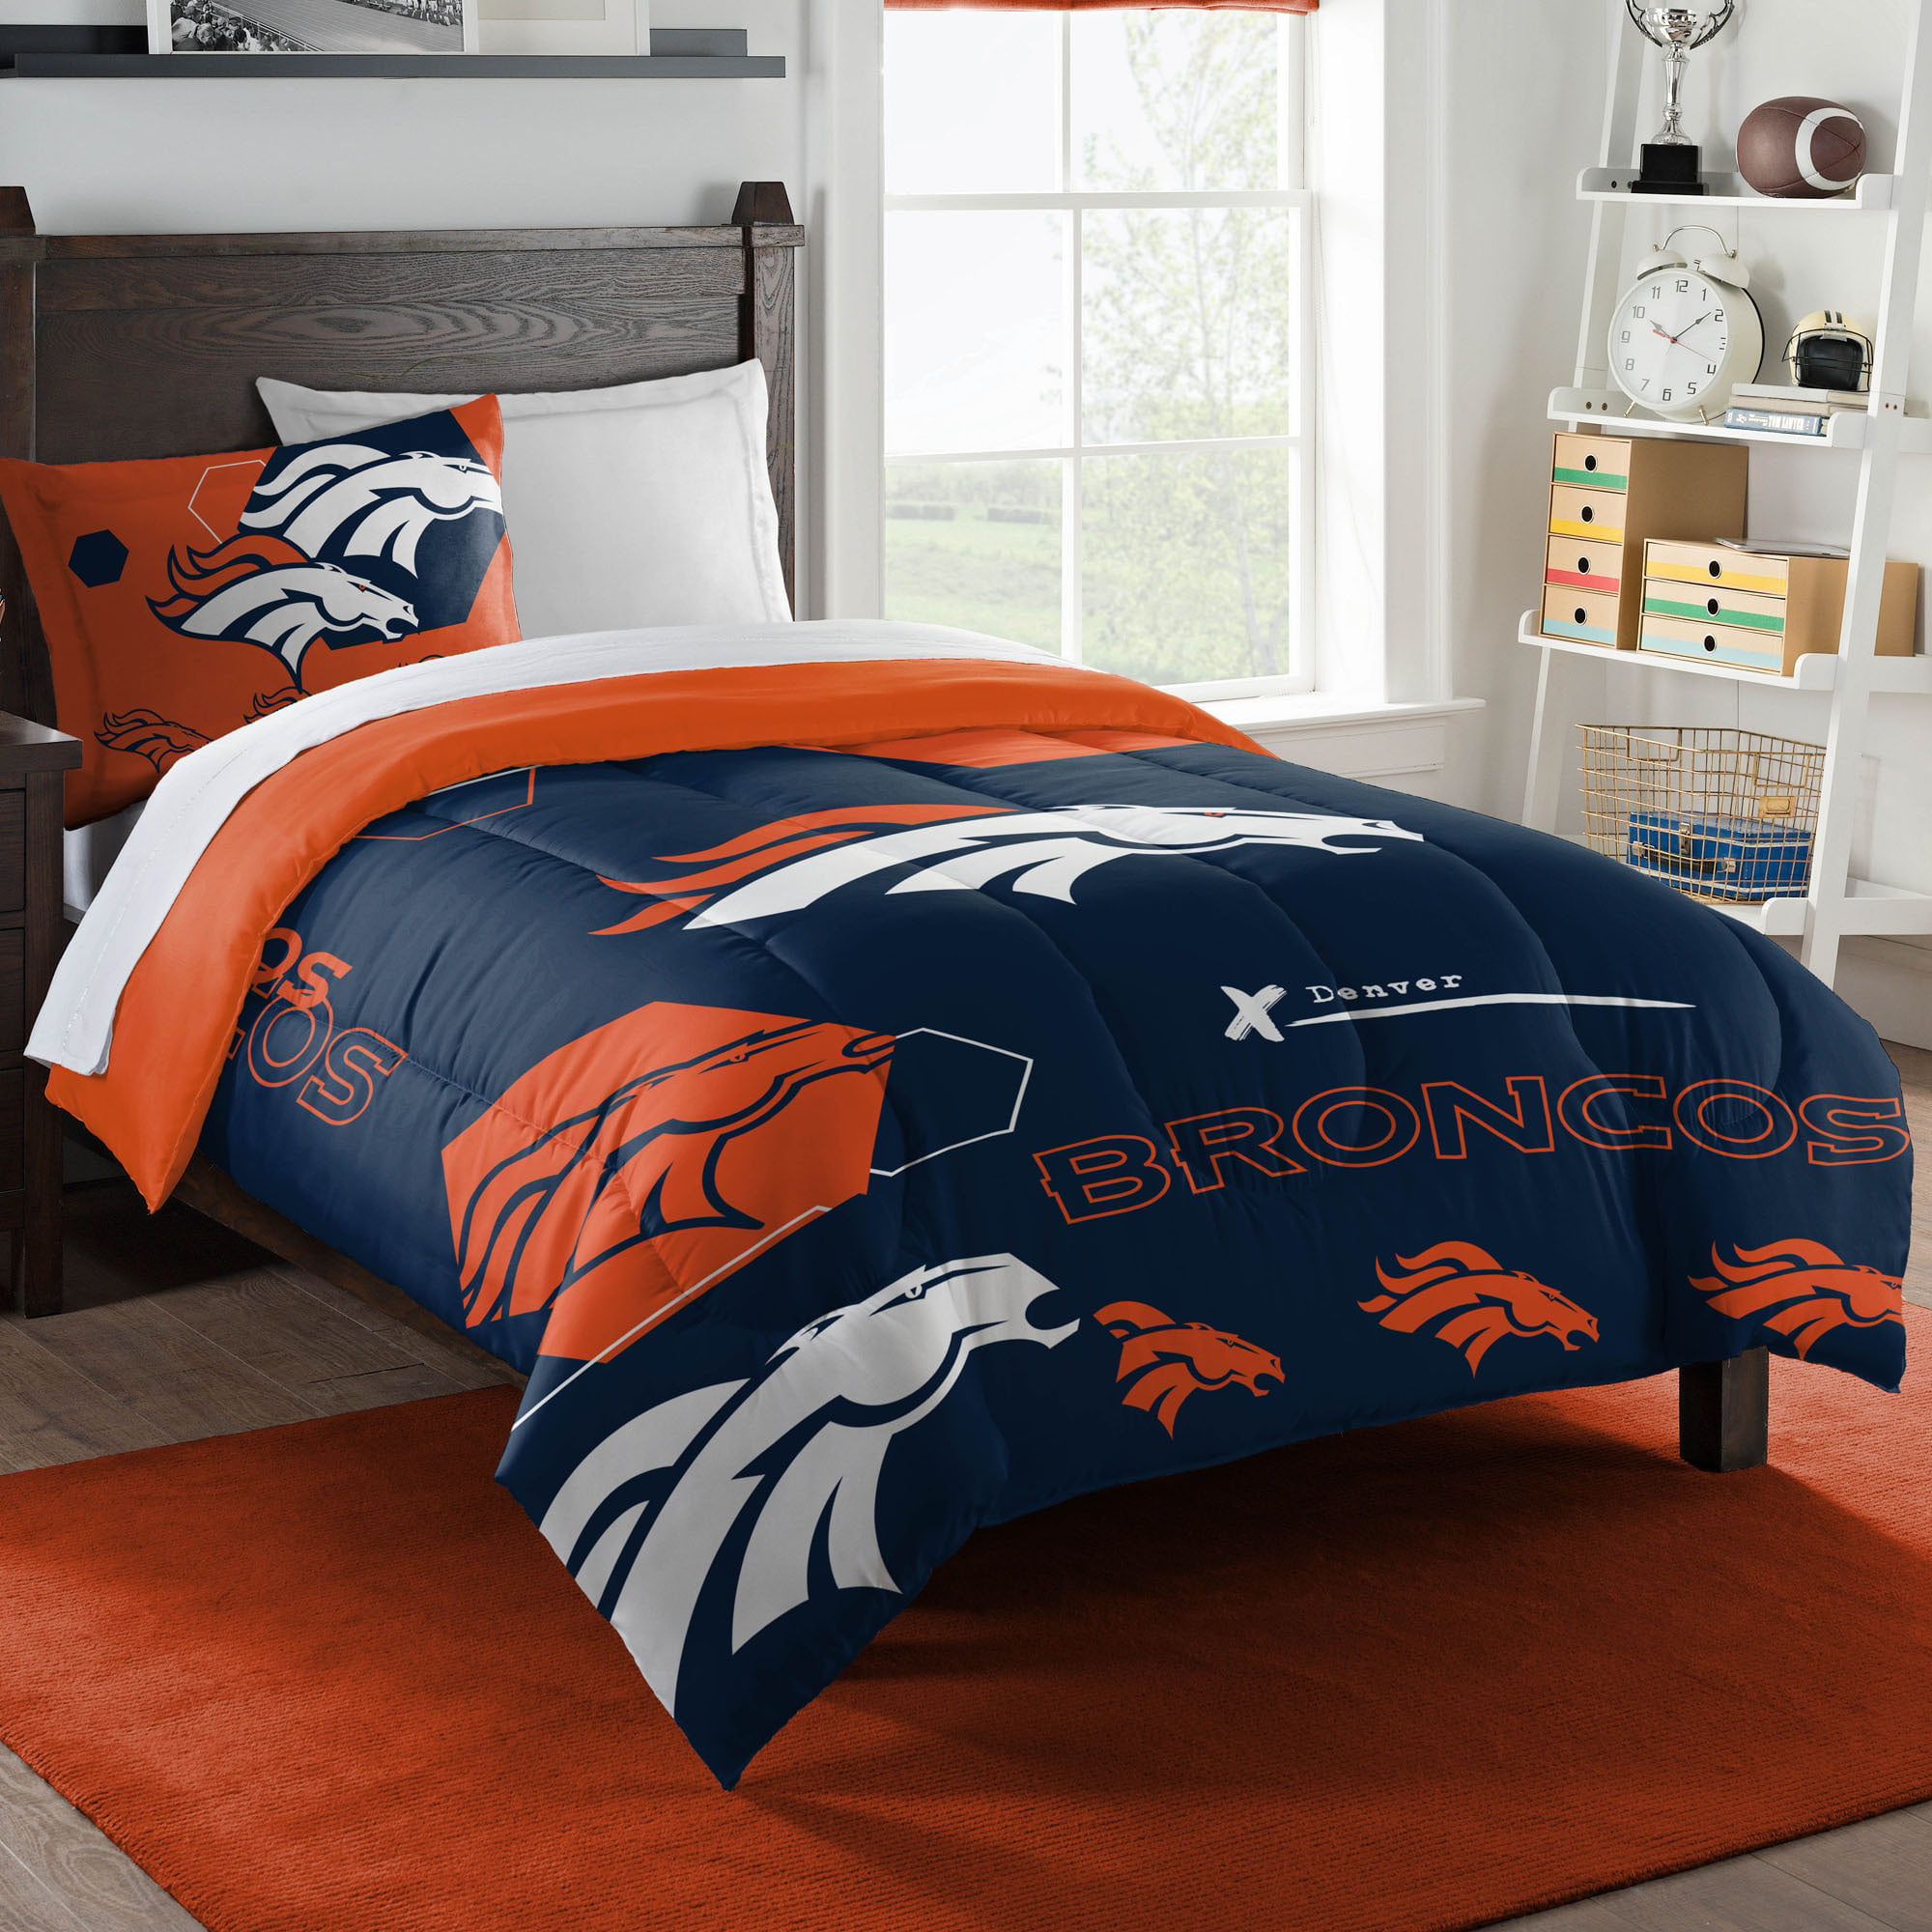 2 Pc TWIN Size Printed Comforter/Sham Set Denver Broncos 